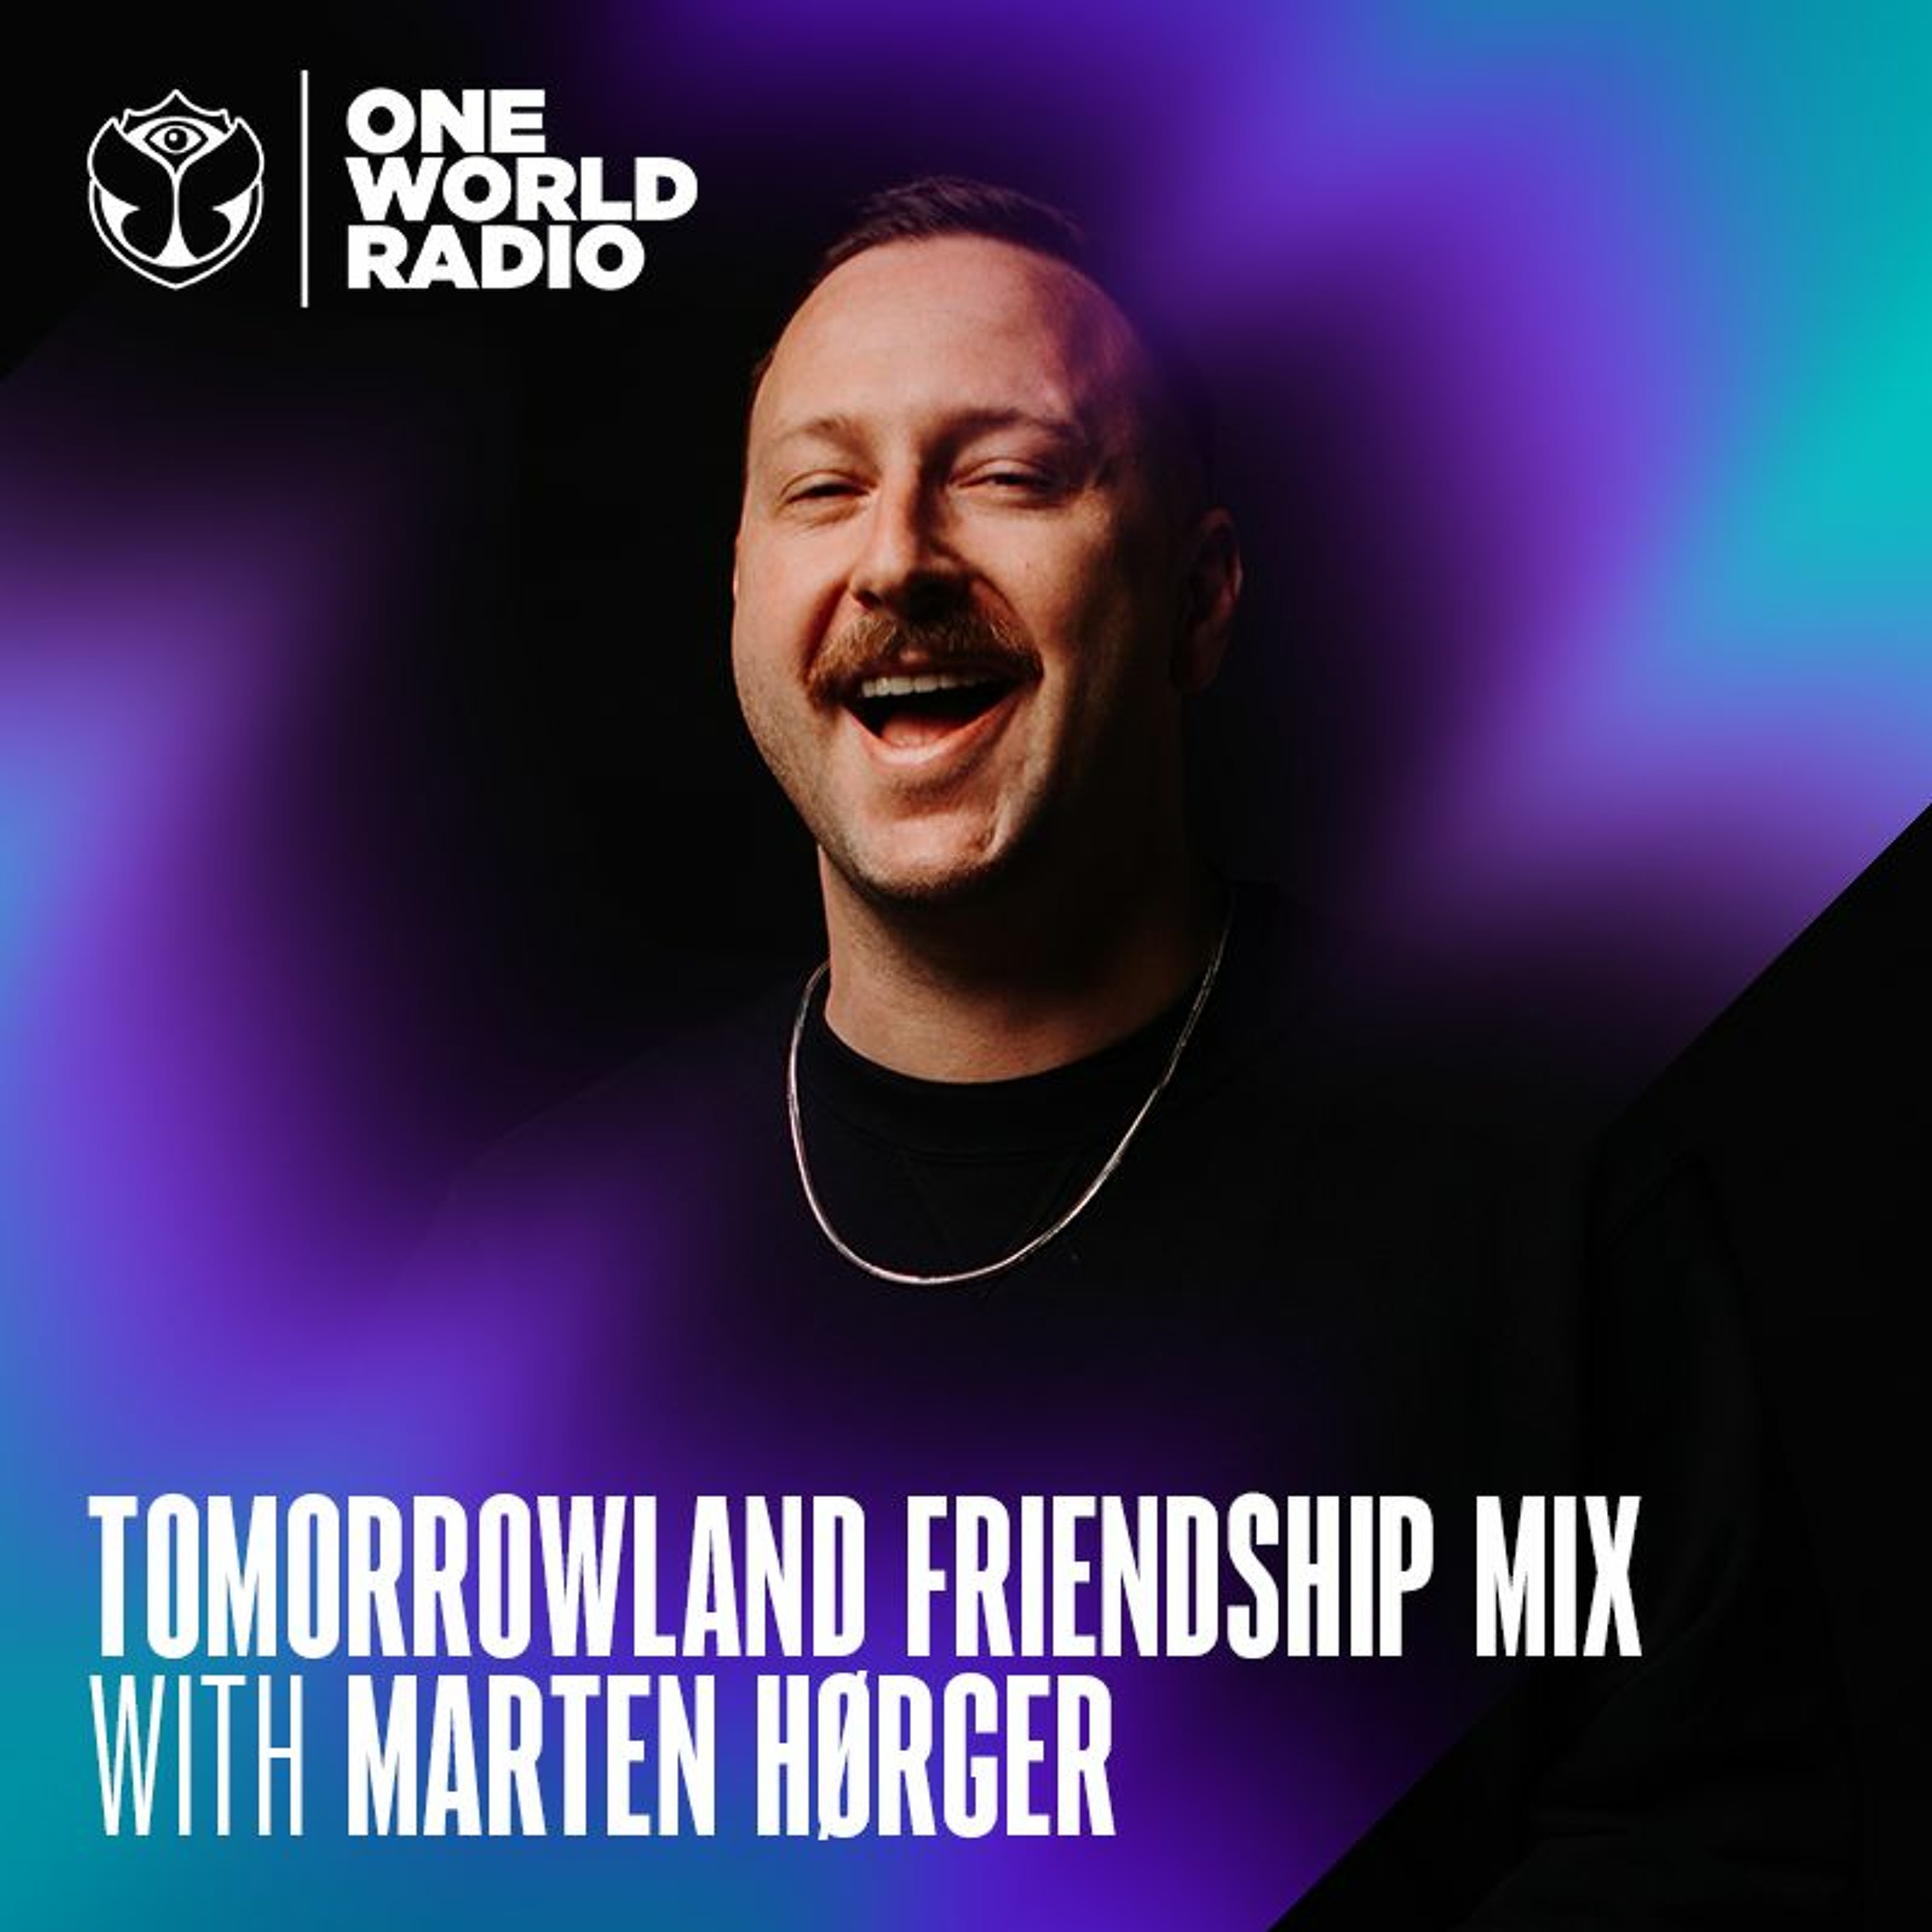 Tomorrowland Friendship Mix by MARTEN HØRGER — April 2023